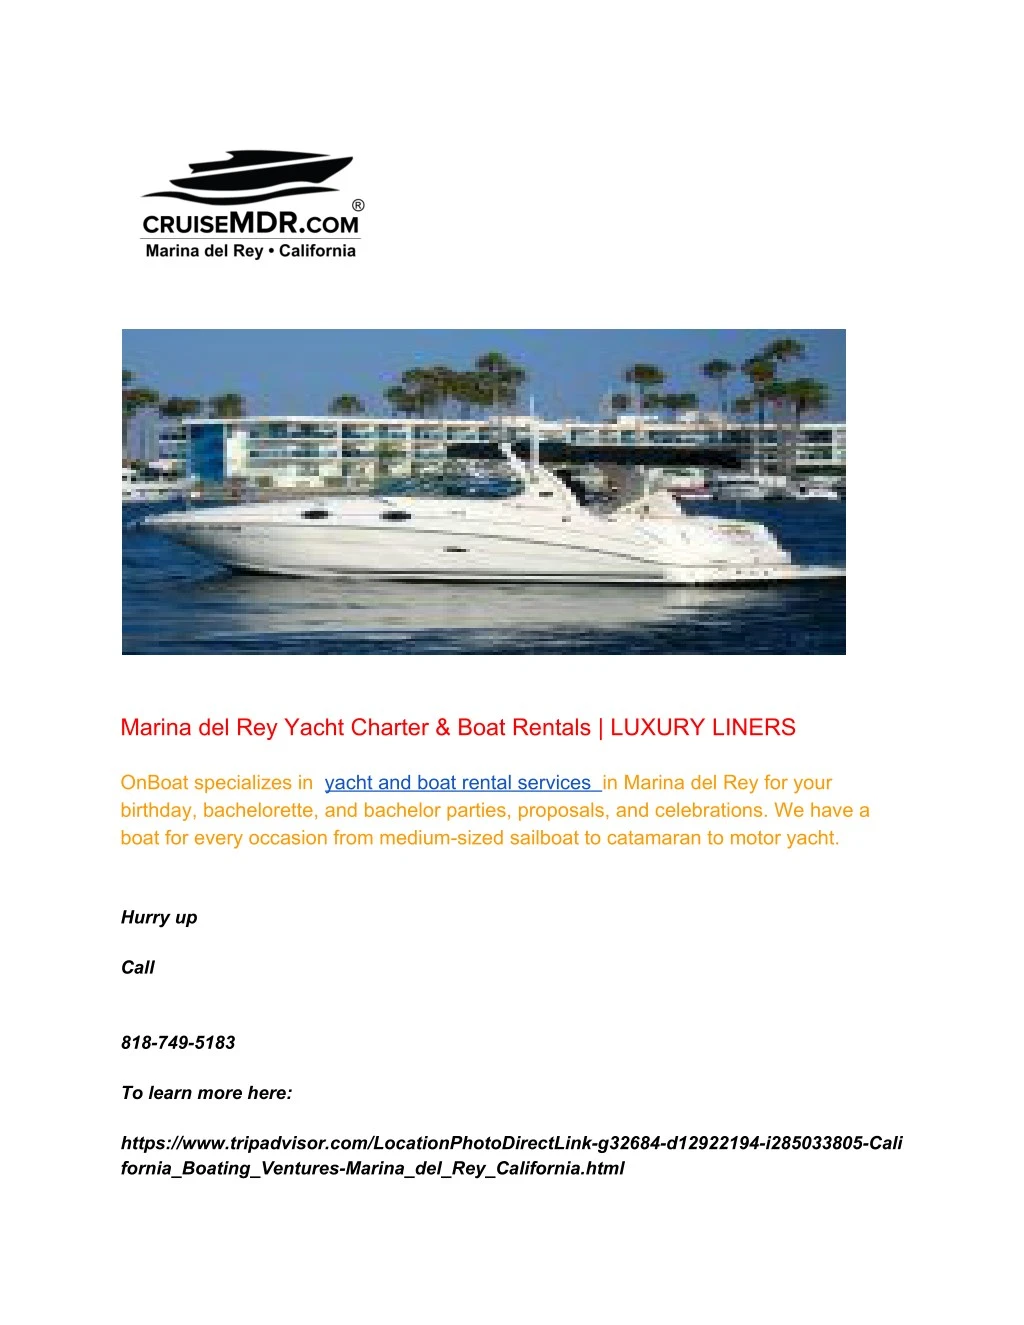 marina del rey yacht charter boat rentals luxury n.